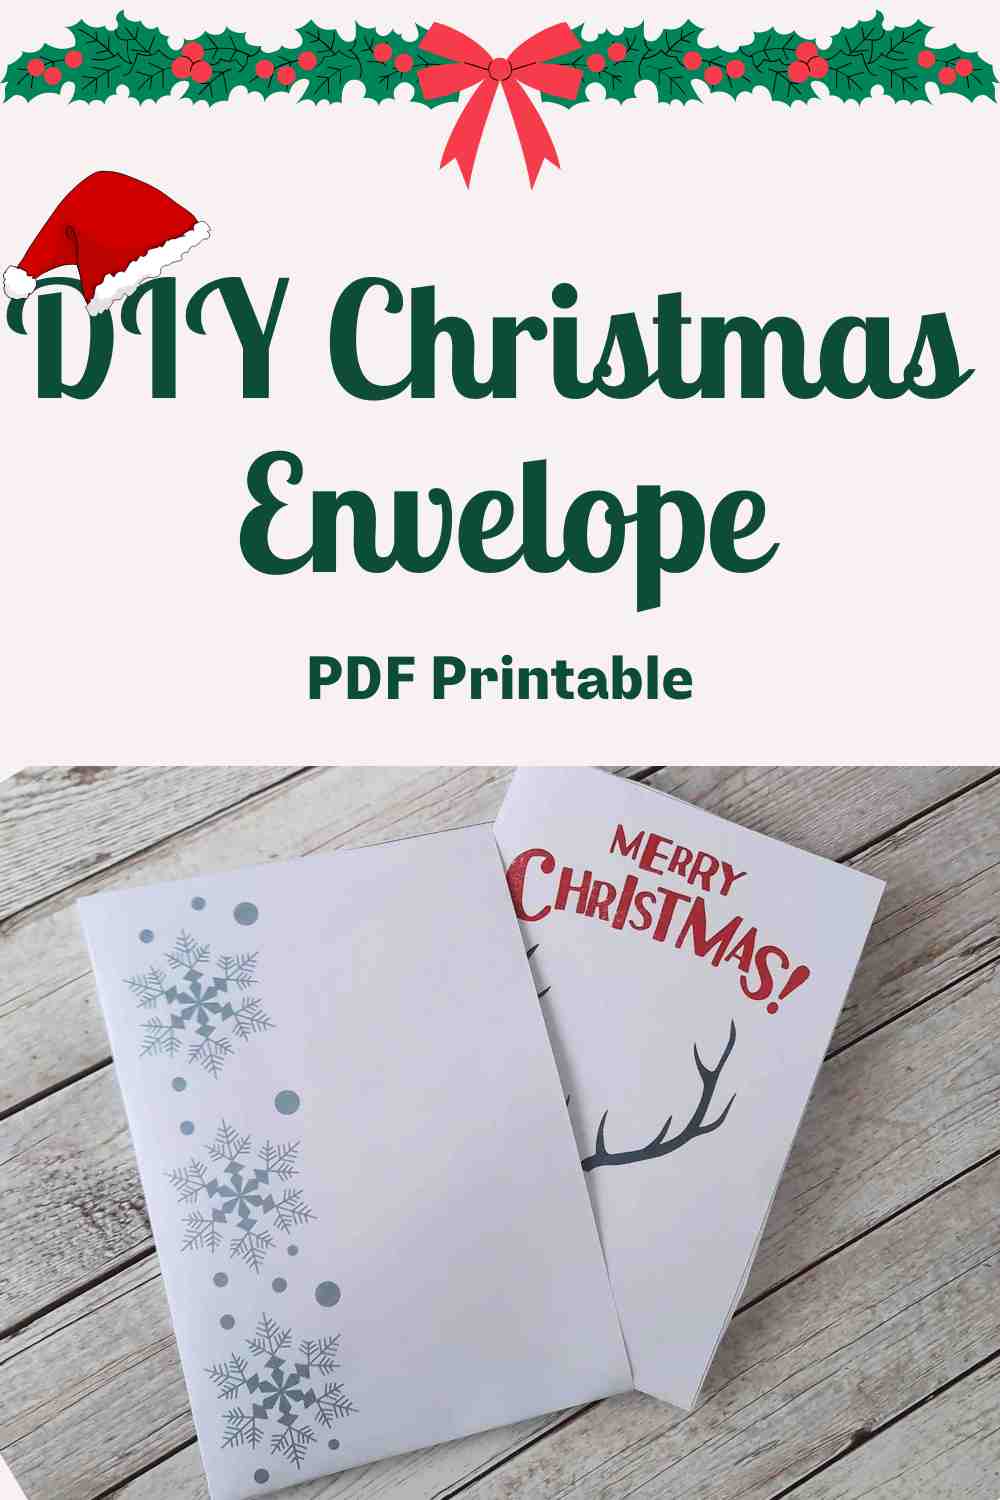 DIY Christmas Envelope Printable